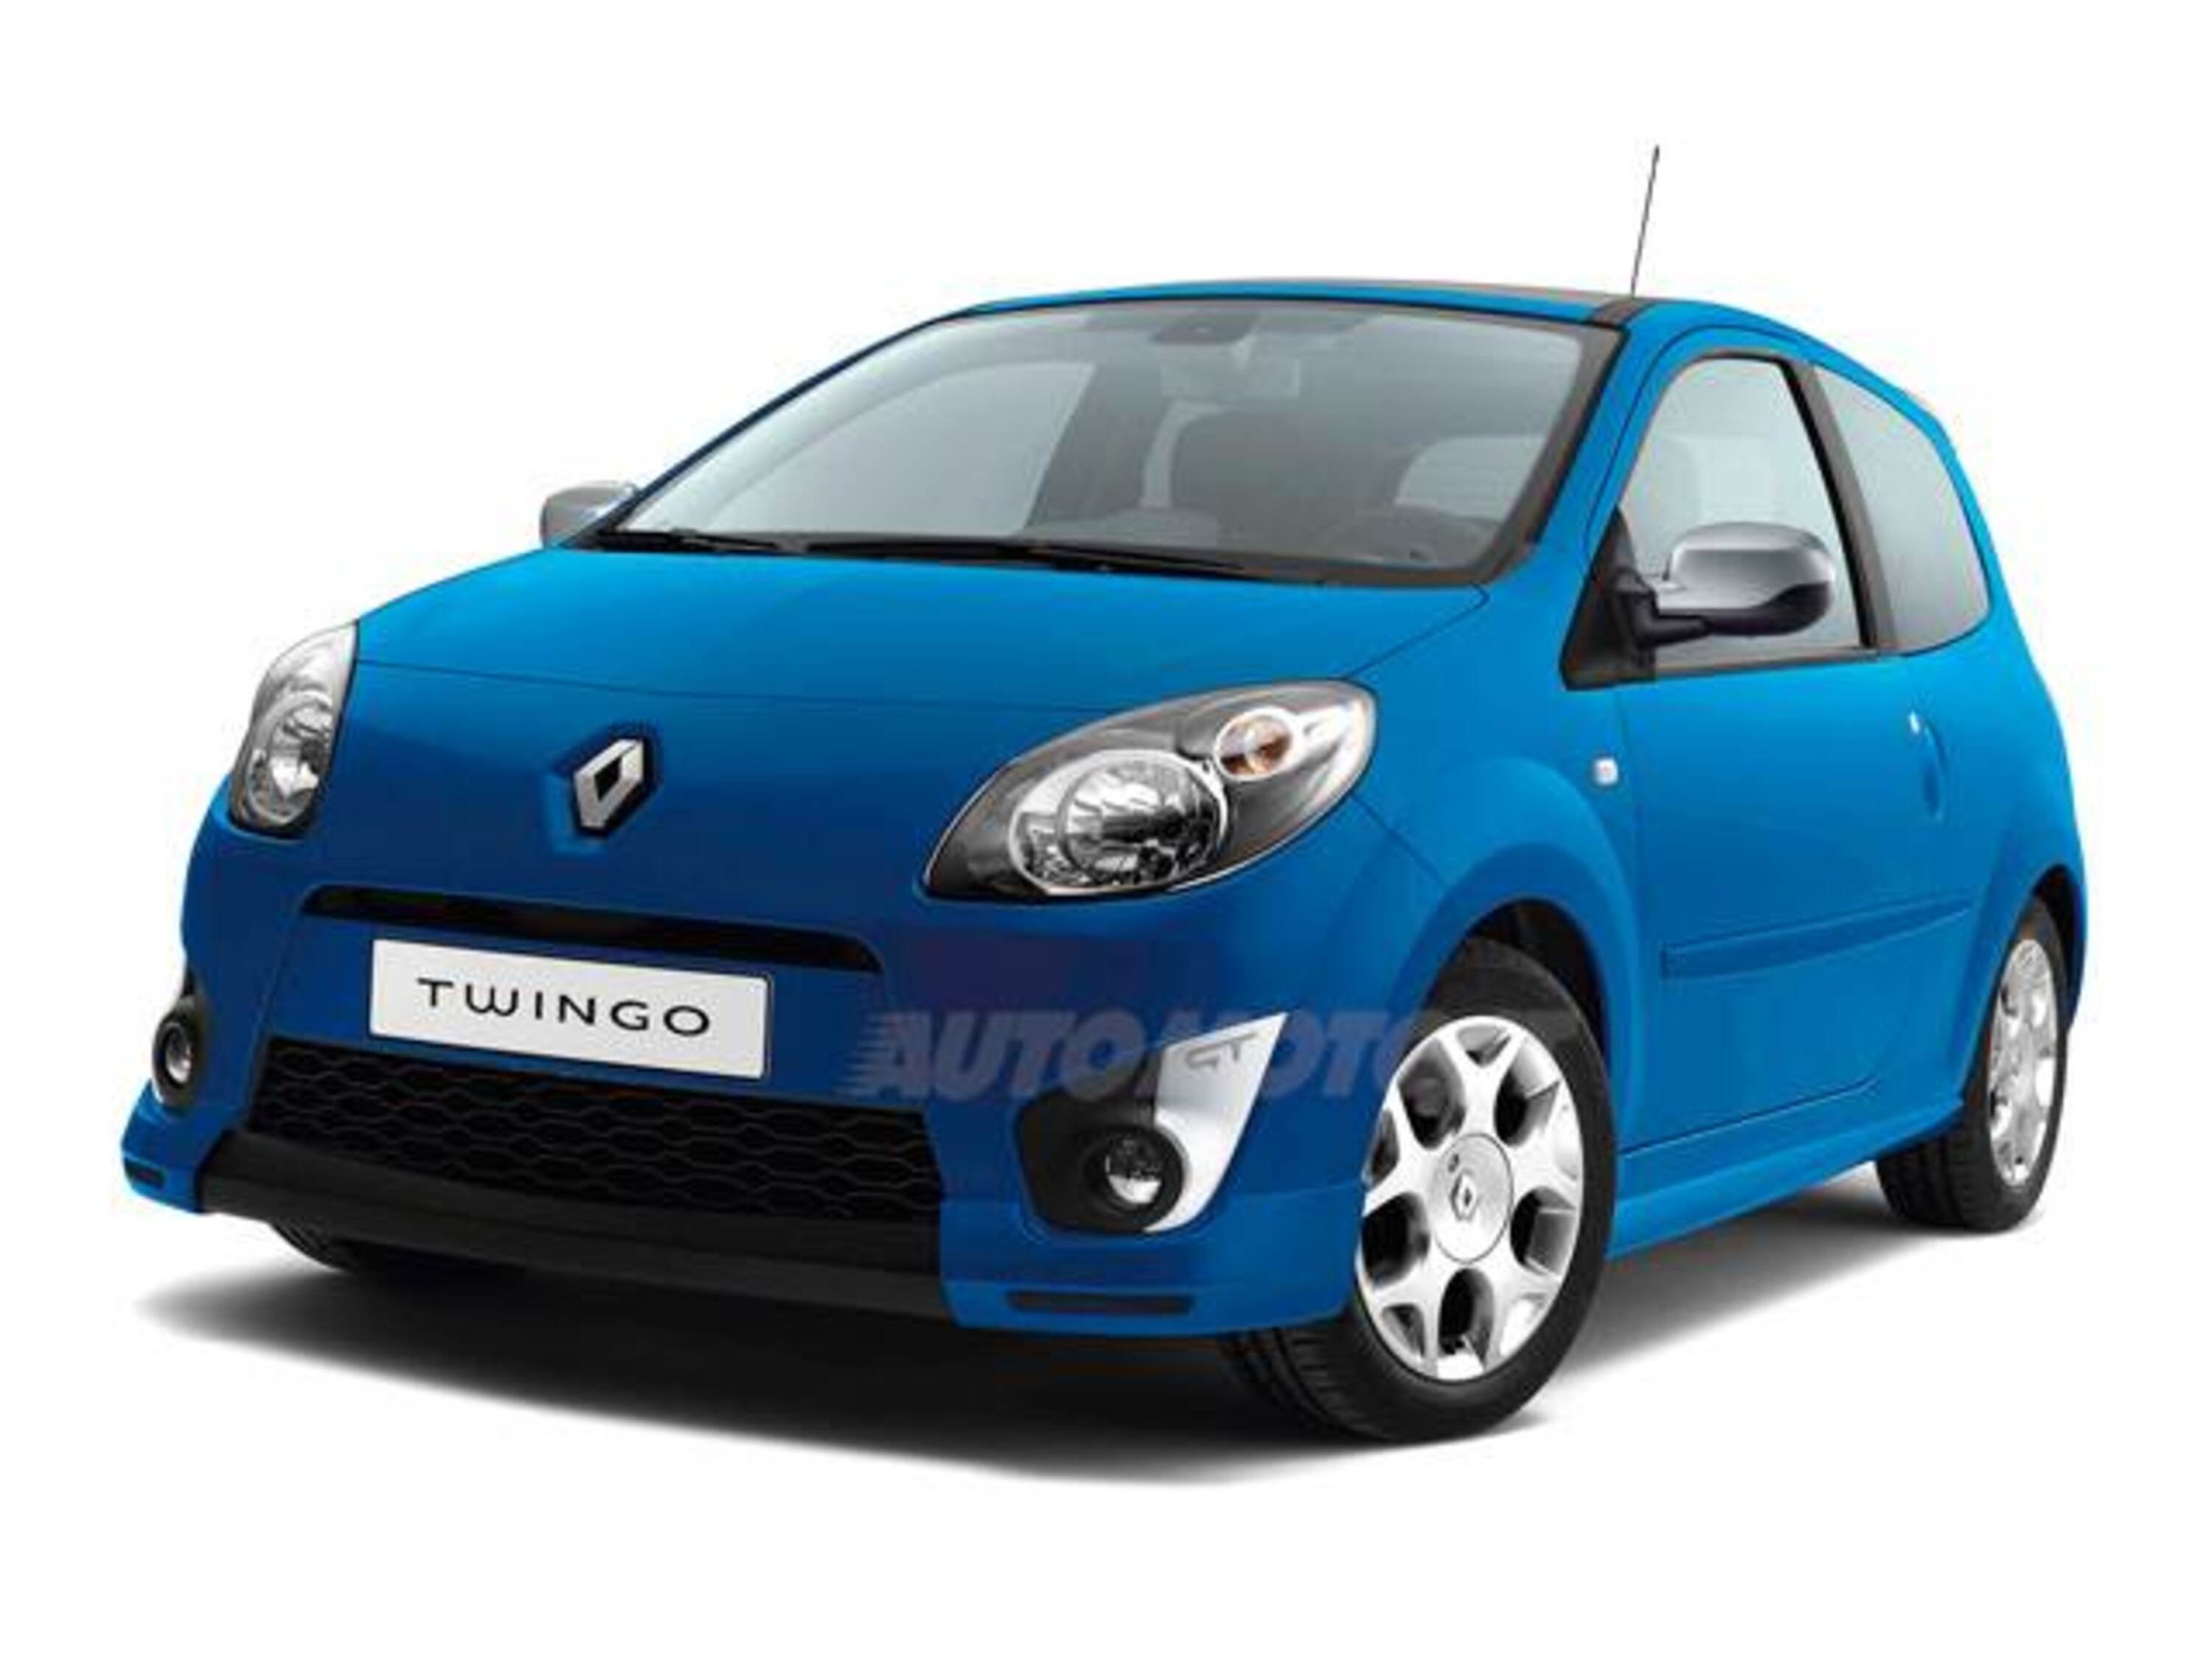 Renault Twingo 1.2 16V TCE Dynamique my 10